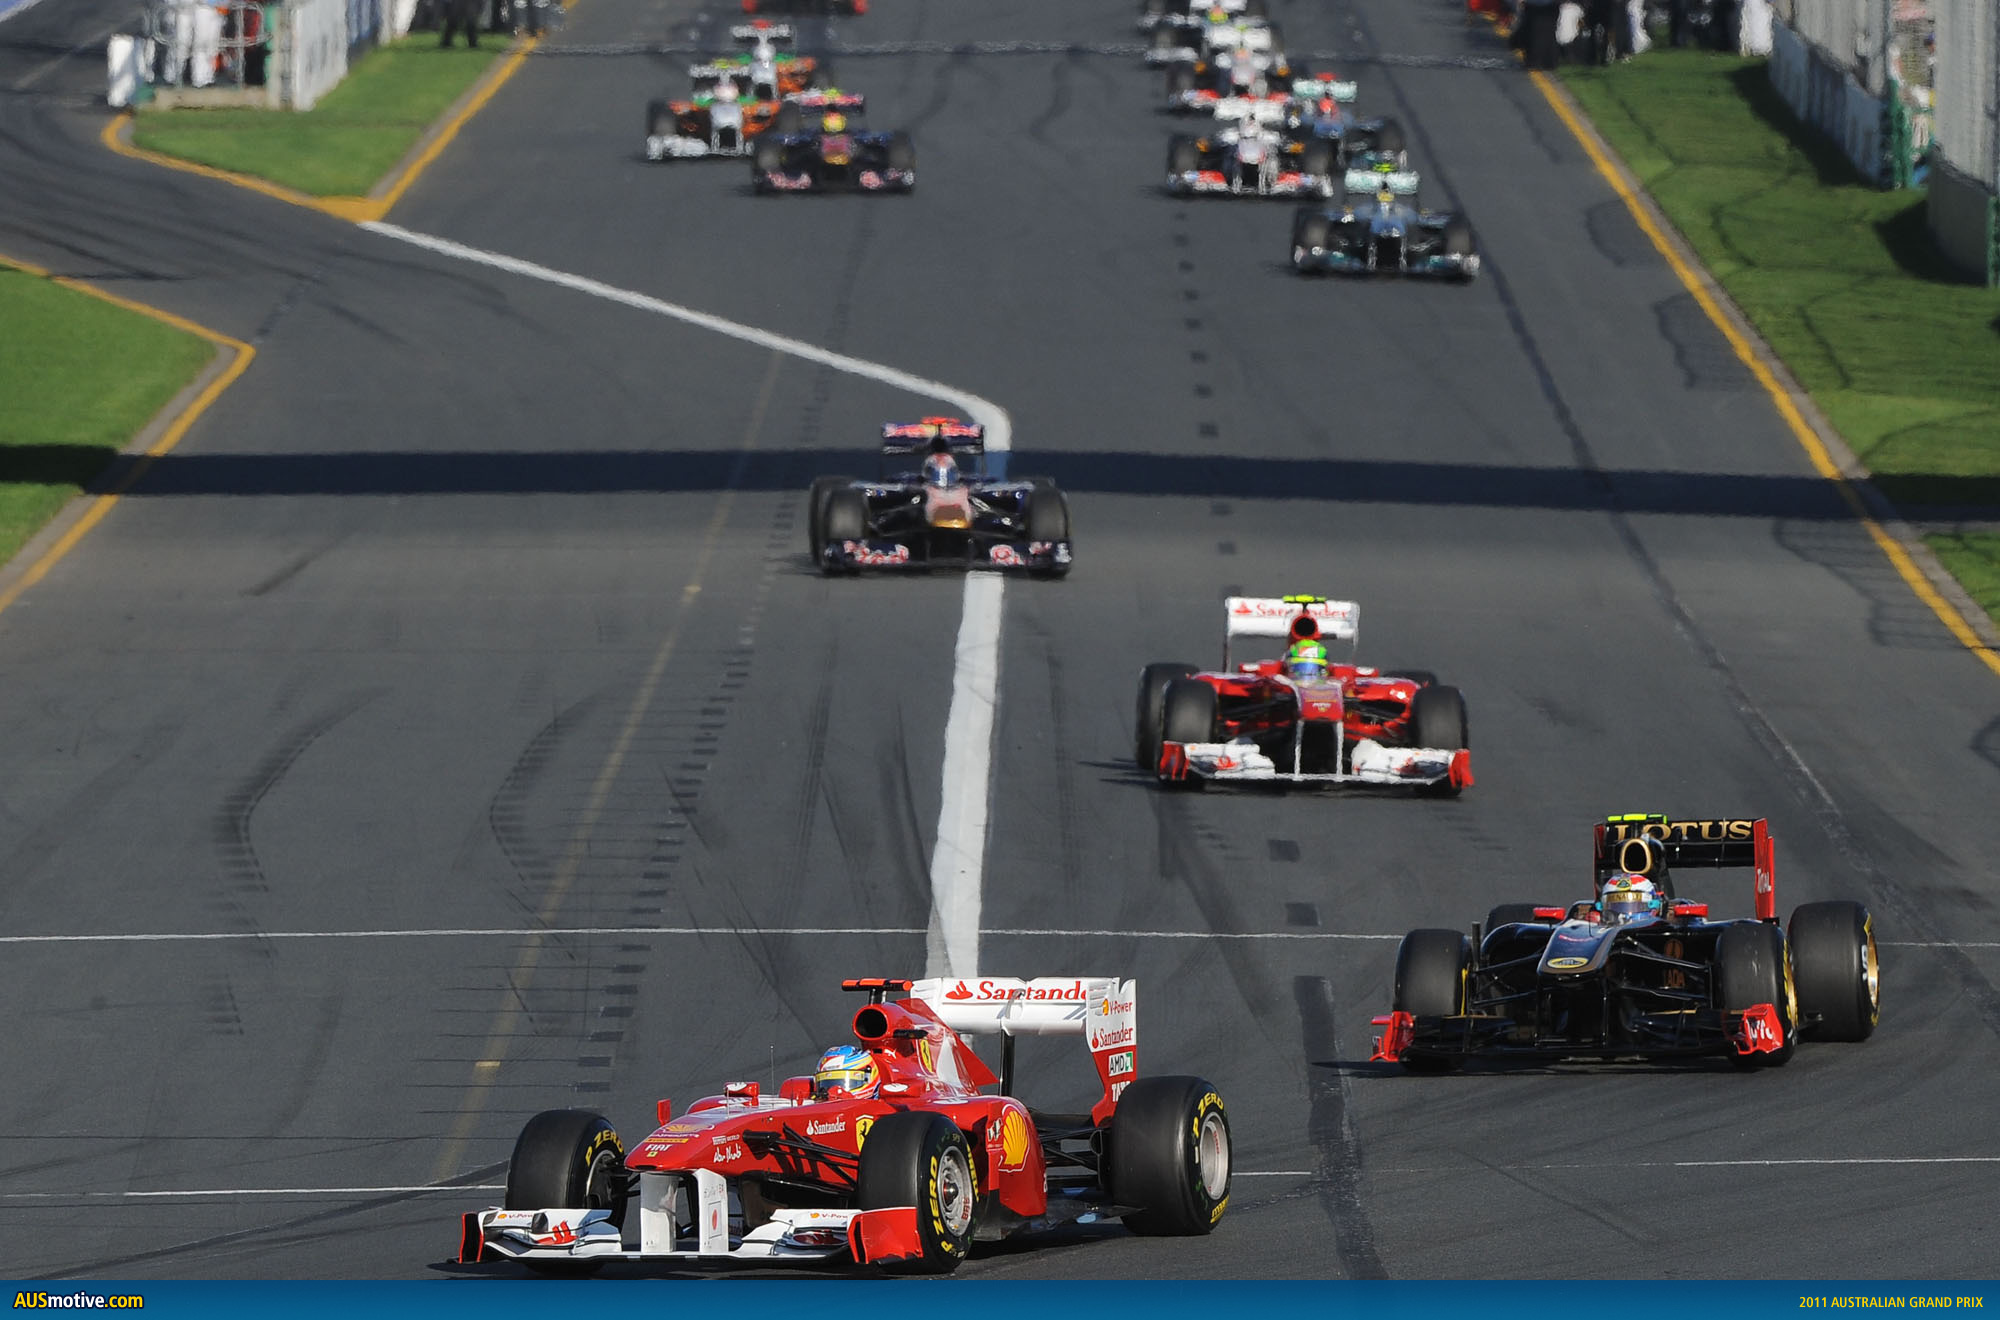 2011 Australian Grand Prix in pictures – AUSmotive.com